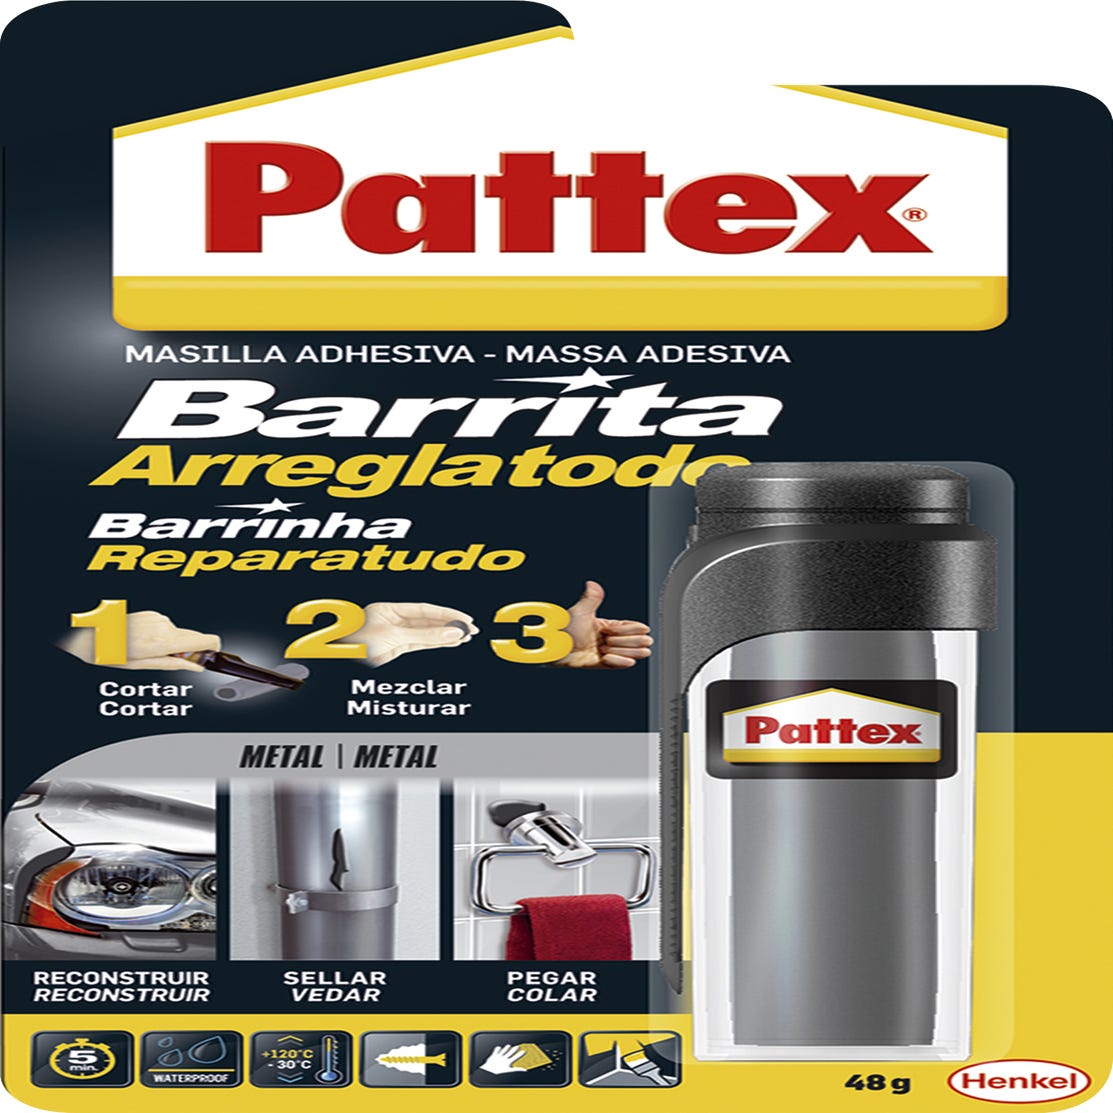 Masilla bicomponente Barrita Arreglatodo Pattex 48 gr metal